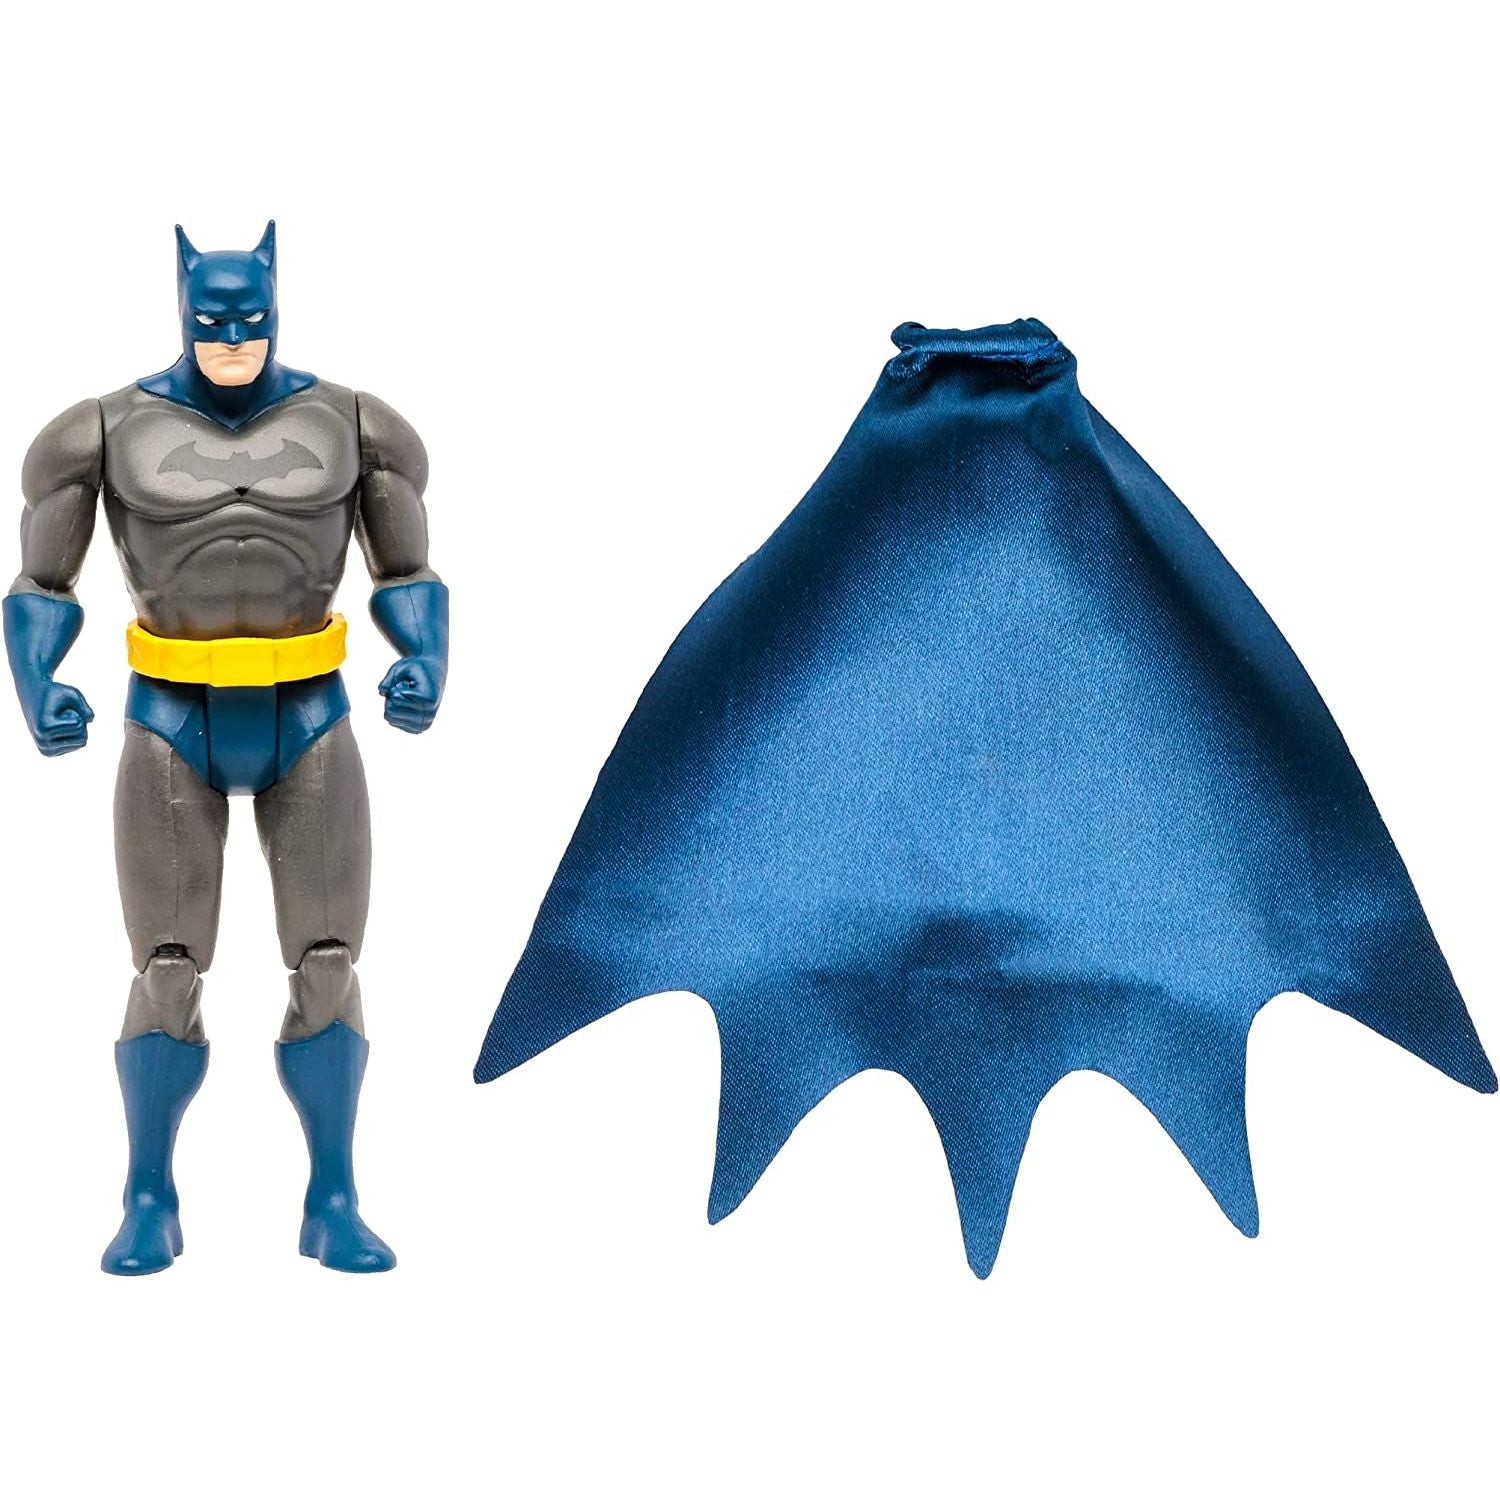 DC Direct - Super Powers - Hush Batman Figure with accessories - Heretoserveyou